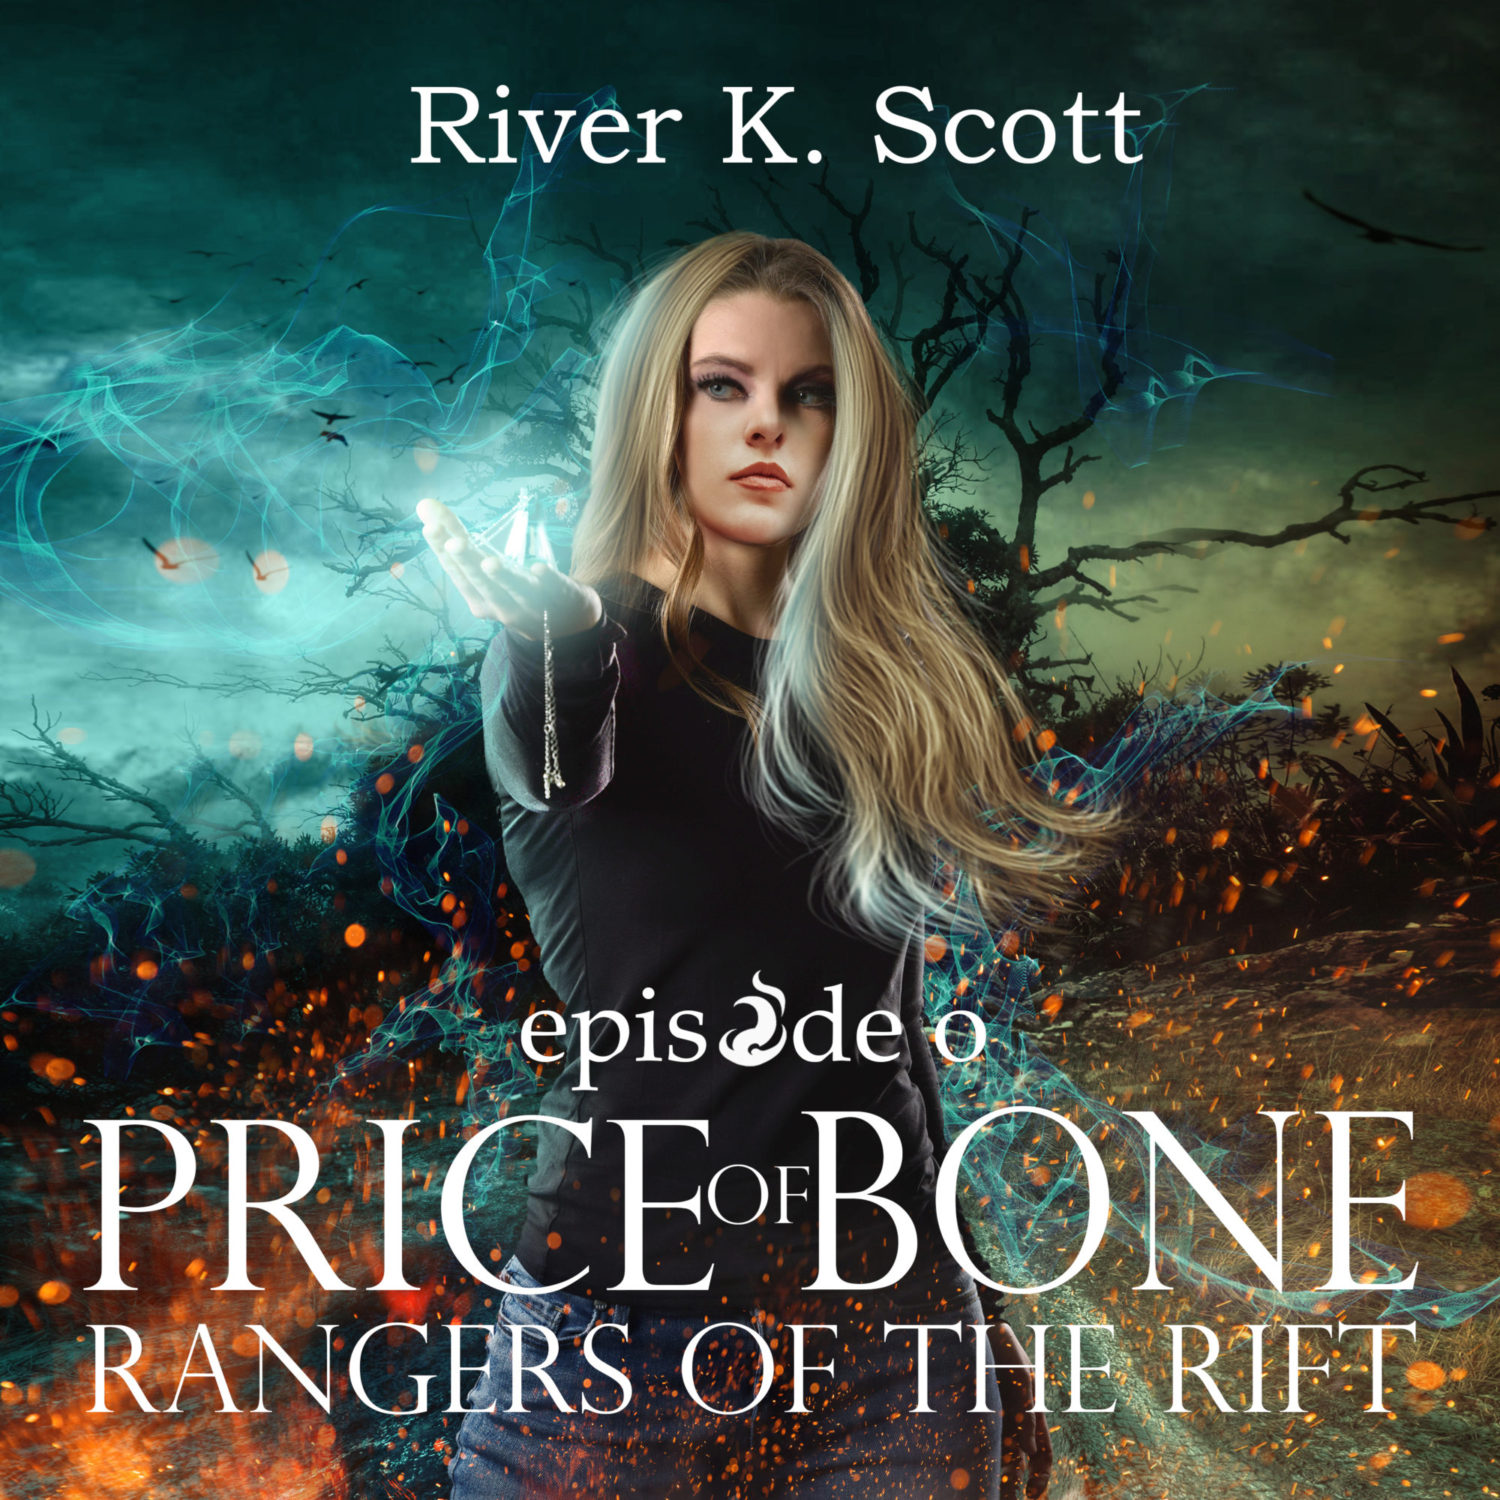 Rift Rangers download the new for apple